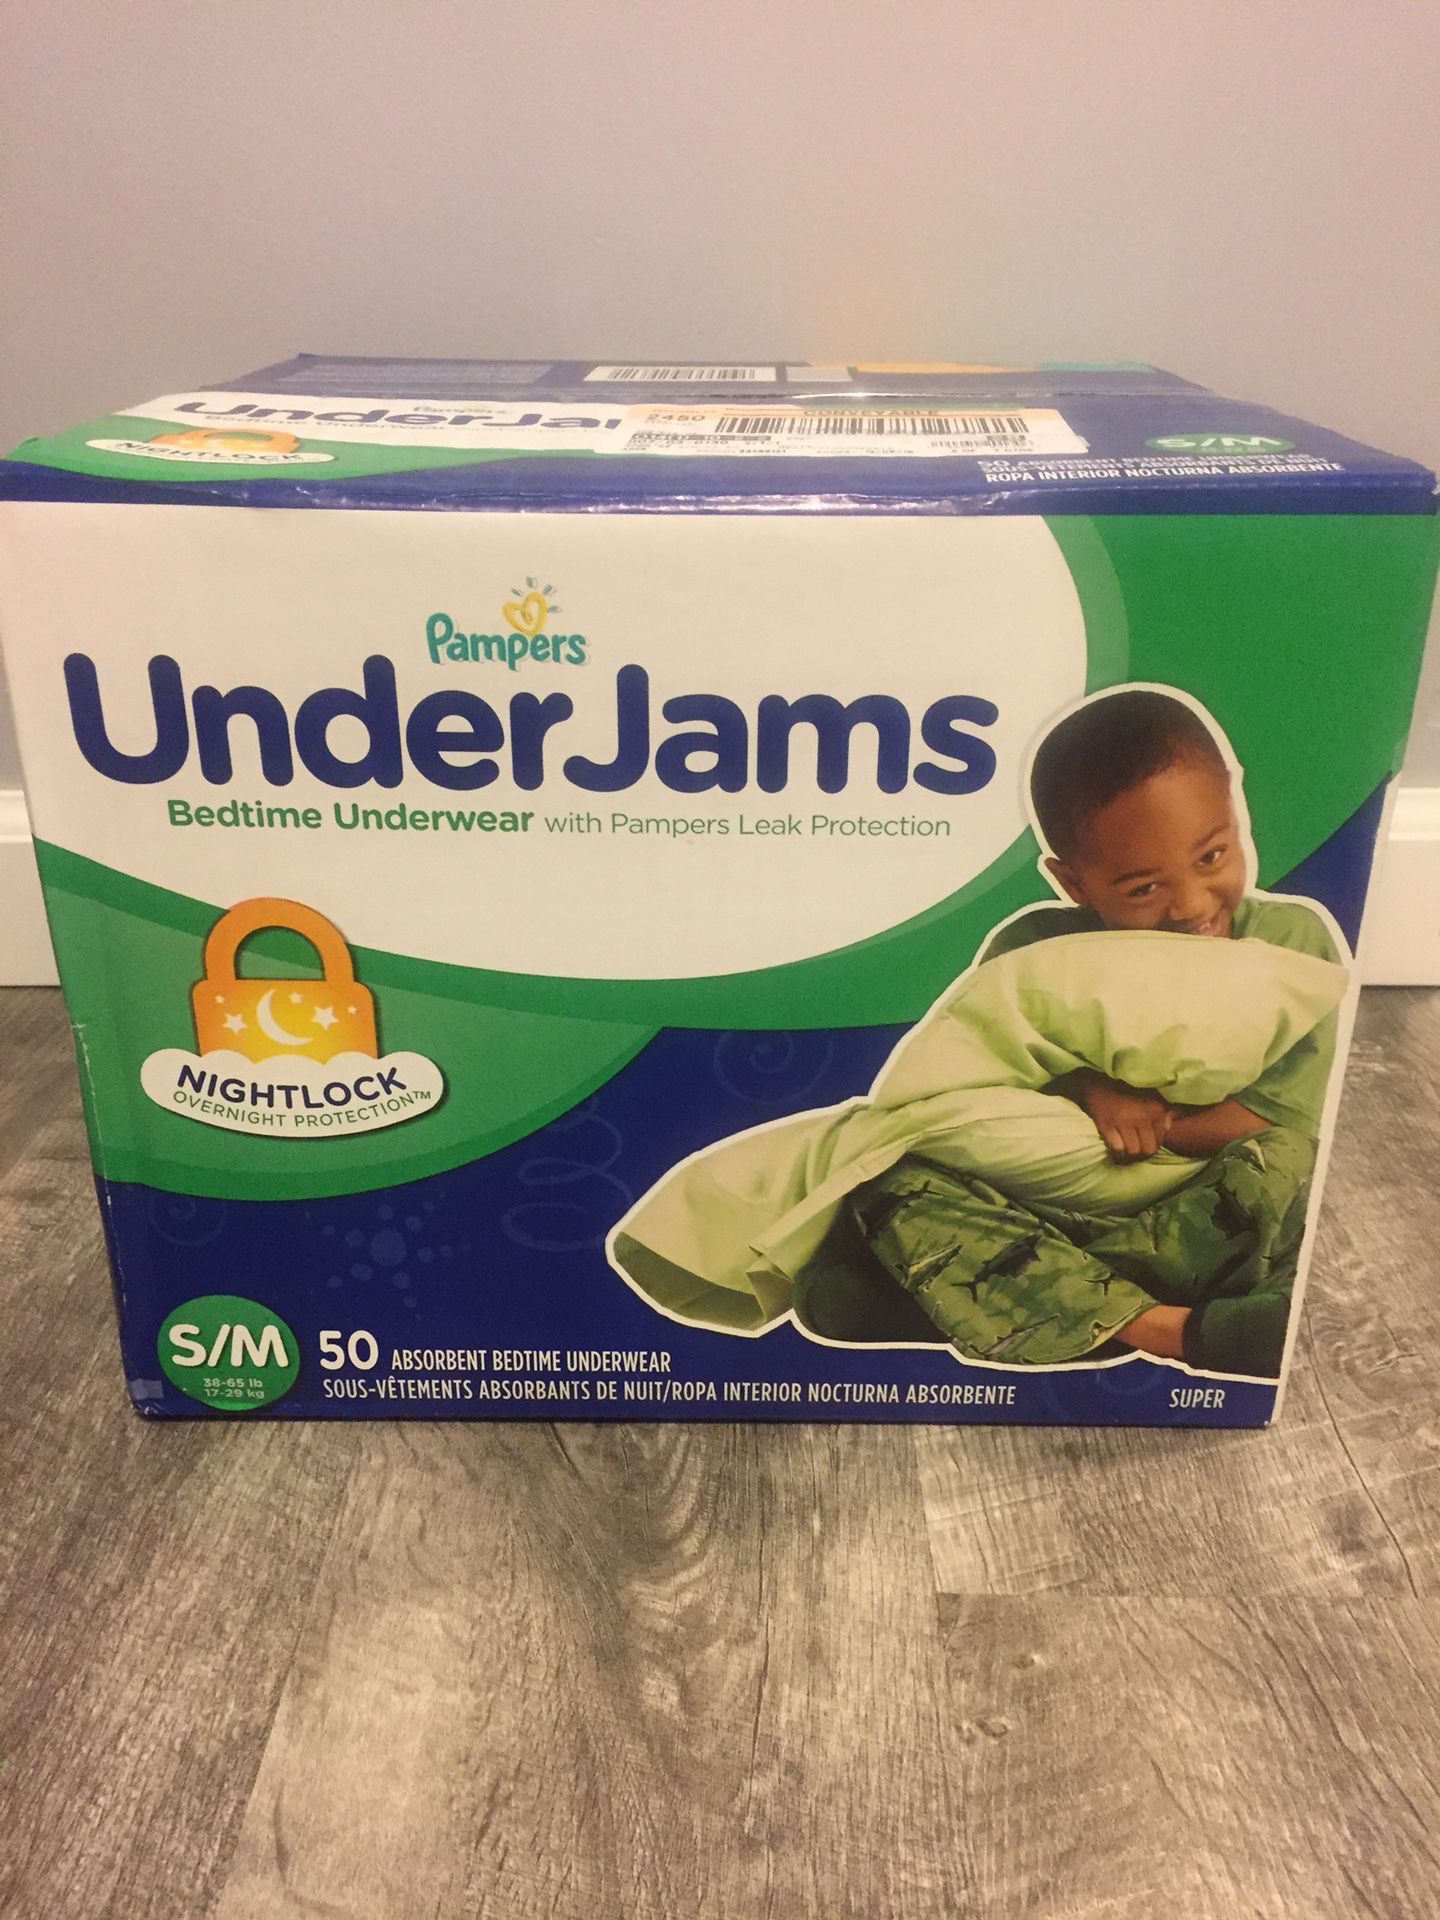 Pampers UnderJams bedtime underwear $18/ pick up Gahanna Firm Price